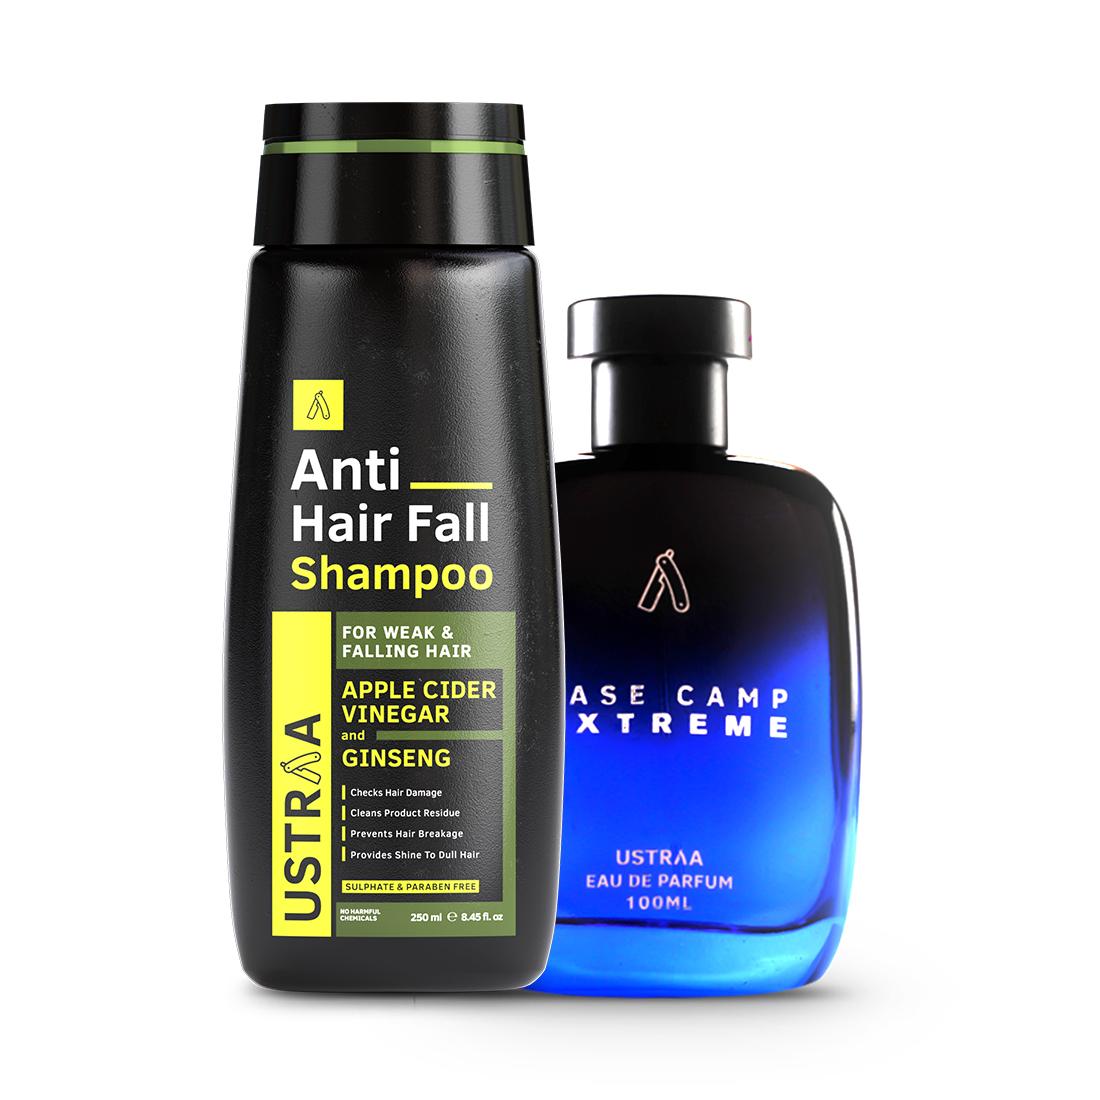  Base Camp Extreme EDP - Perfume for Men & Anti Hair Fall Shampoo